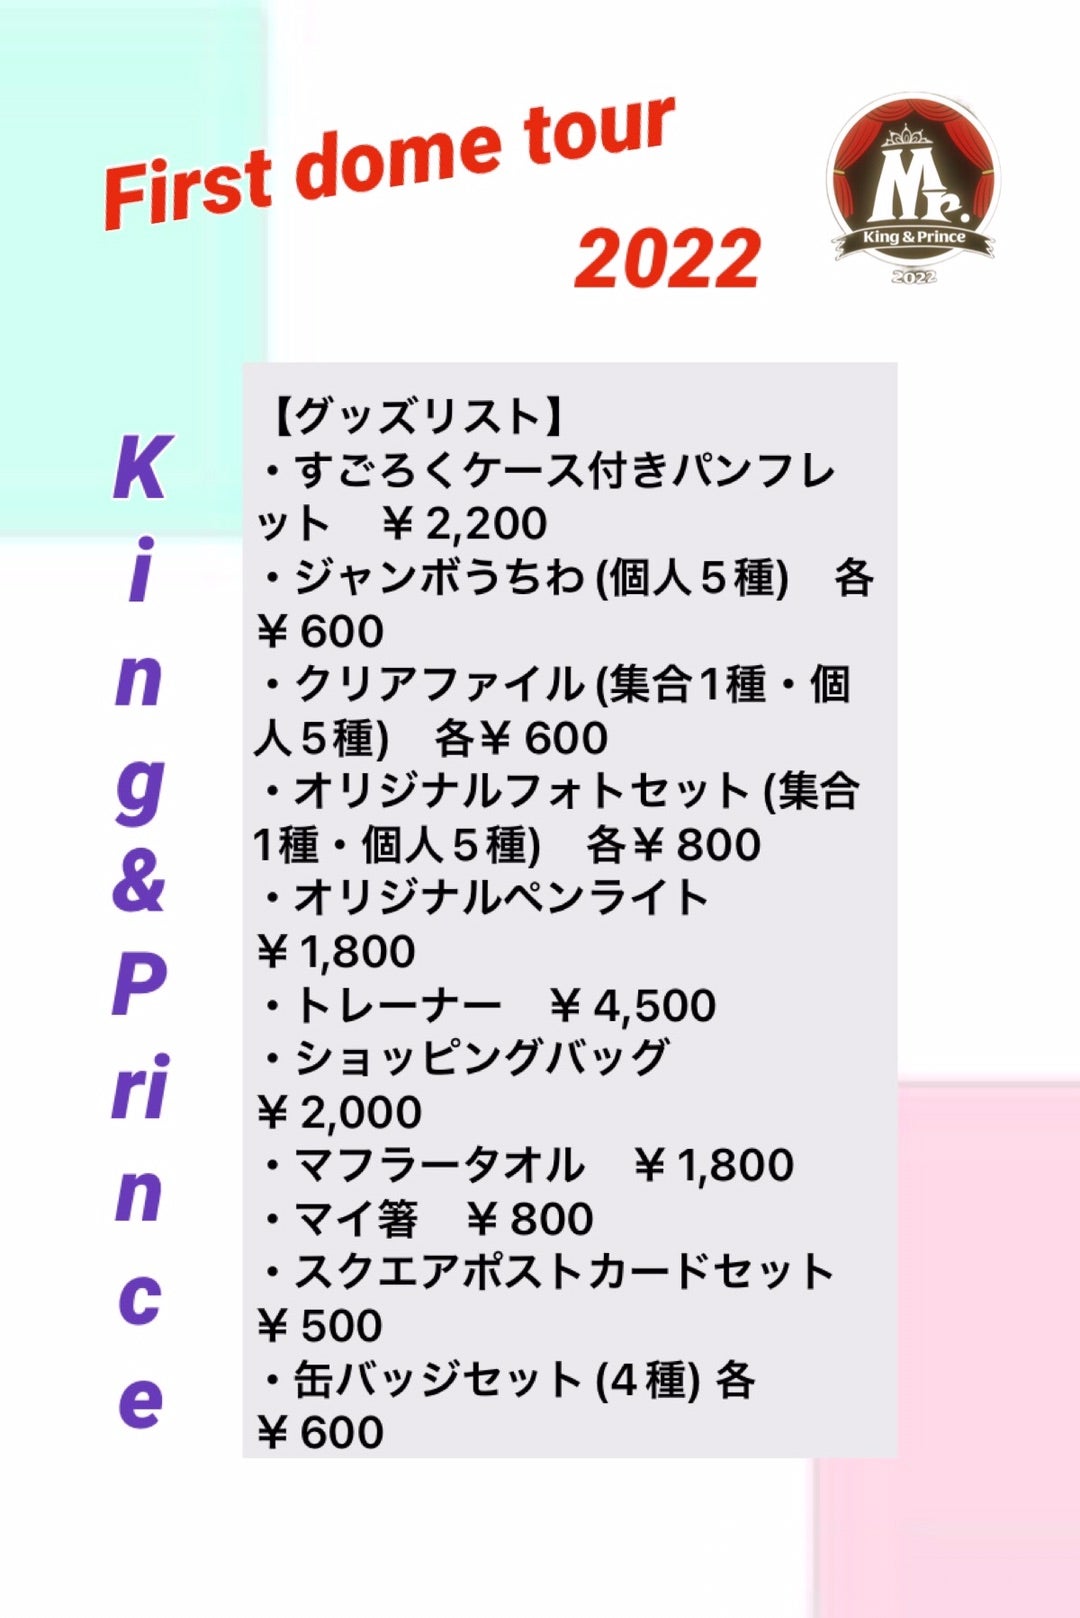 King & Prince Mr.トレーナー・Blu-ray・Tシャツ・キンプリ quetz4.com